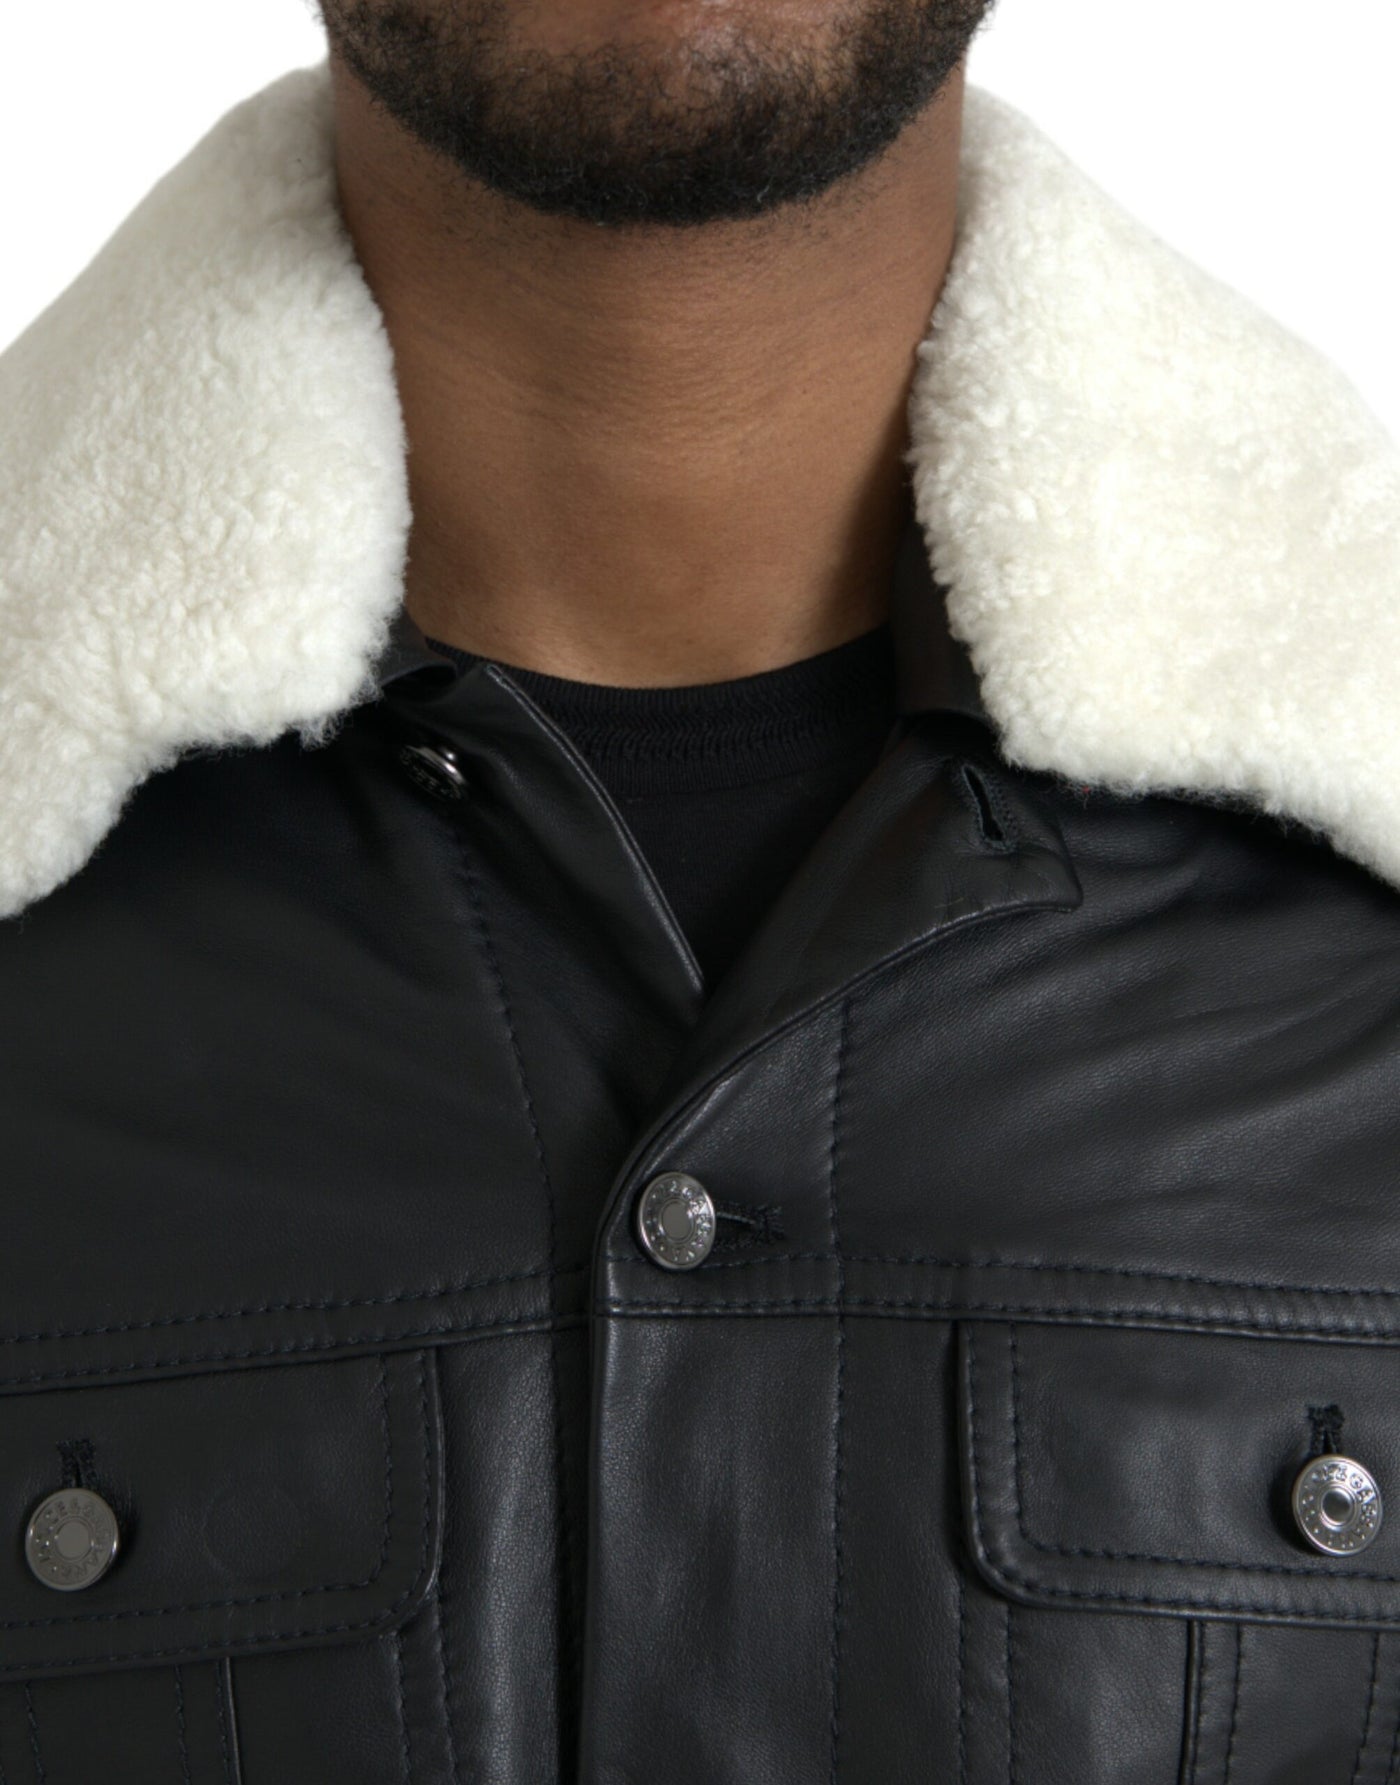 Black Leather Fur Collar Biker Coat Jacket